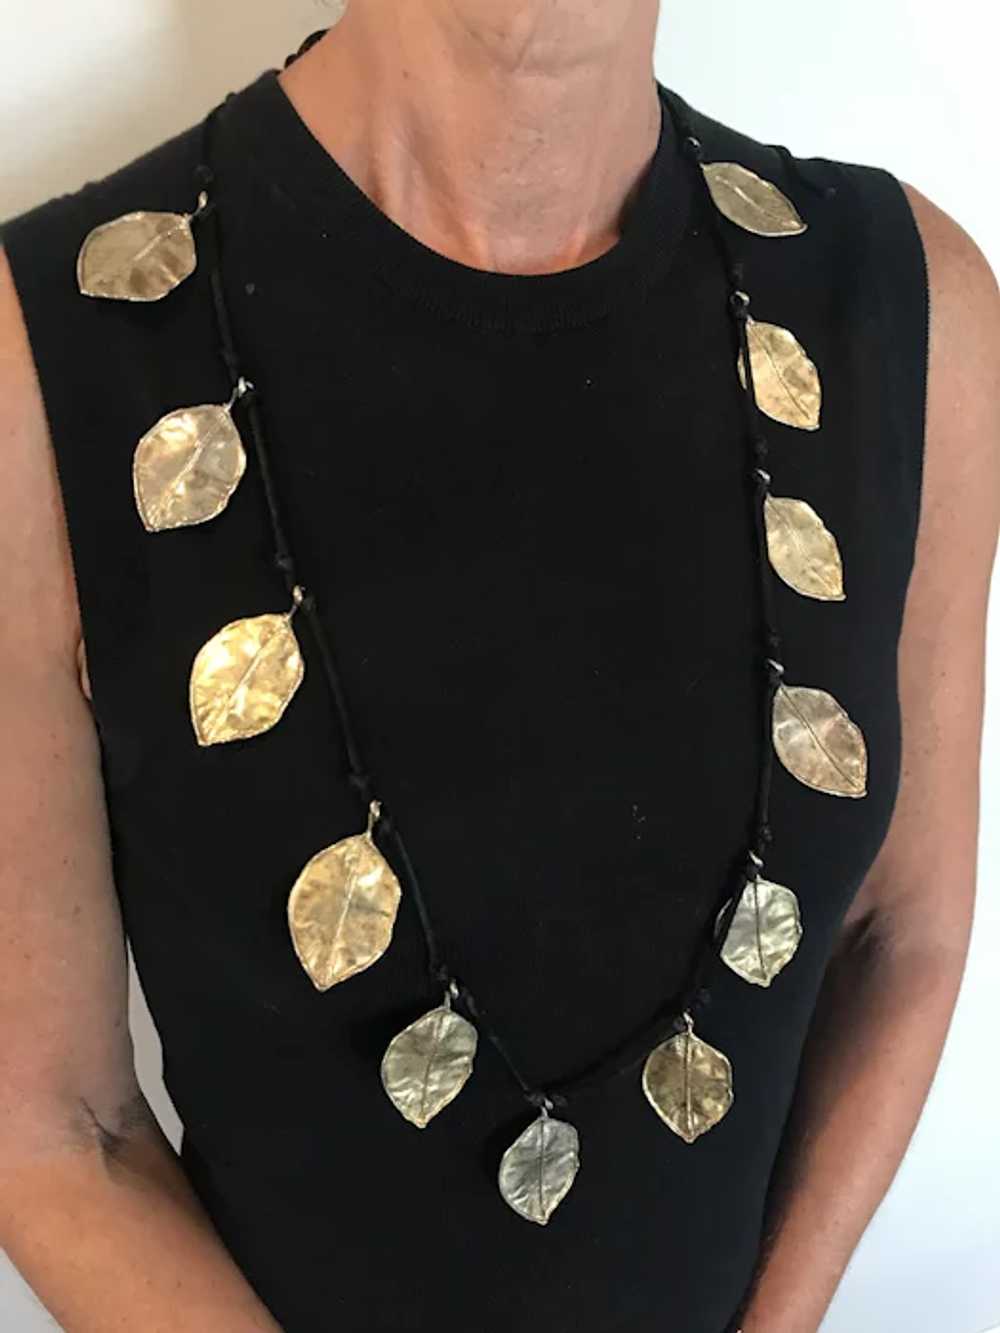 Joanne Cooper 15 Leaf Necklace with Black Chord - image 2